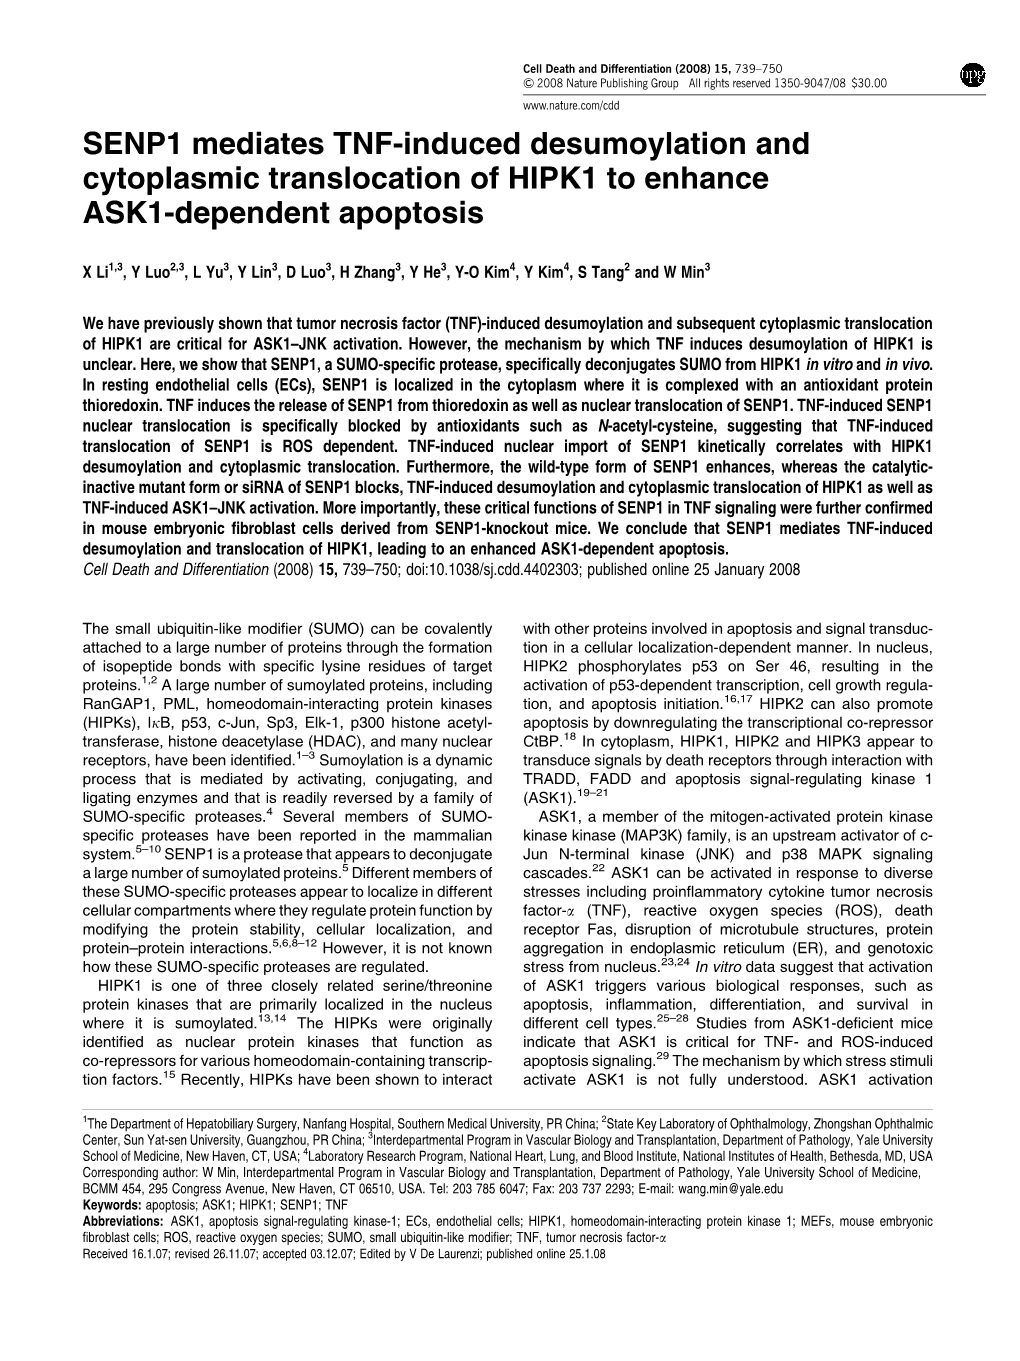 SENP1 Mediates TNF-Induced Desumoylation and Cytoplasmic Translocation of HIPK1 to Enhance ASK1-Dependent Apoptosis